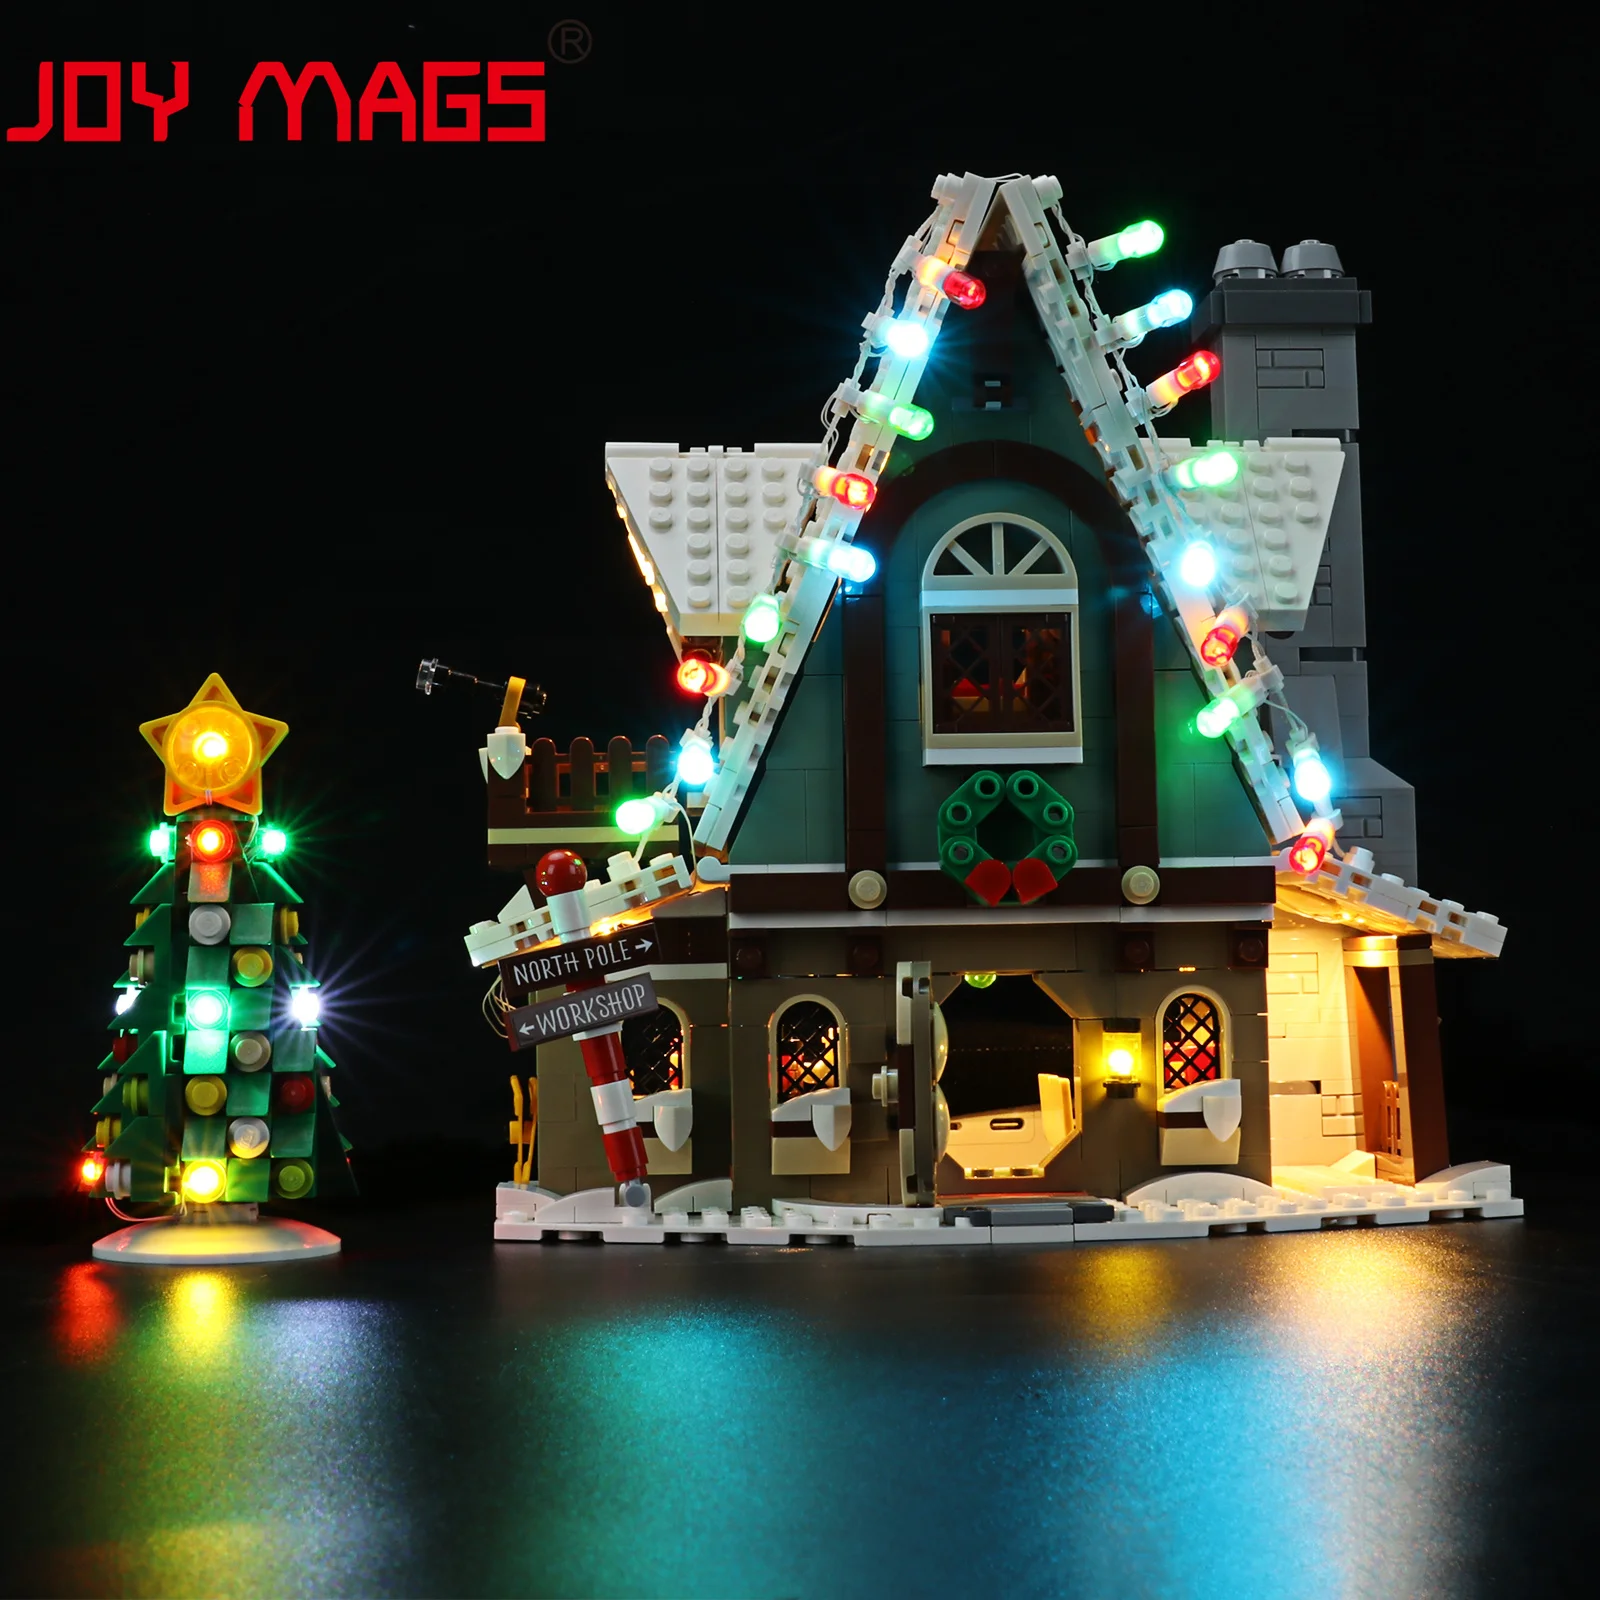 

JOY MAGS Led Light Kit for 10275 Elf Club House Building Blocks Set (NOT Include the Model) Bricks Toys for Children